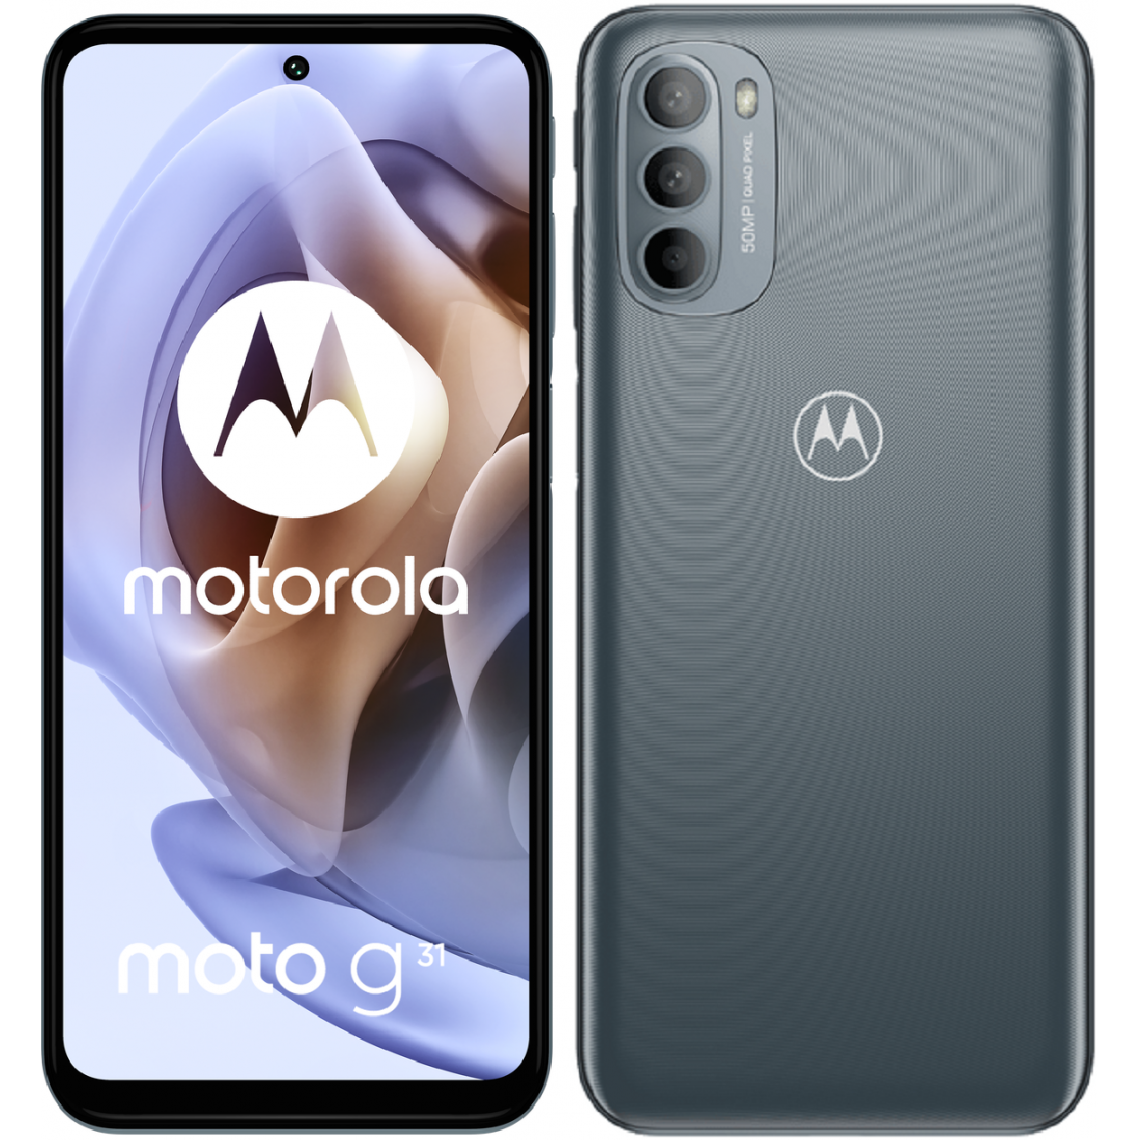 Motorola - Motorola g31 64 go - Smartphone Android